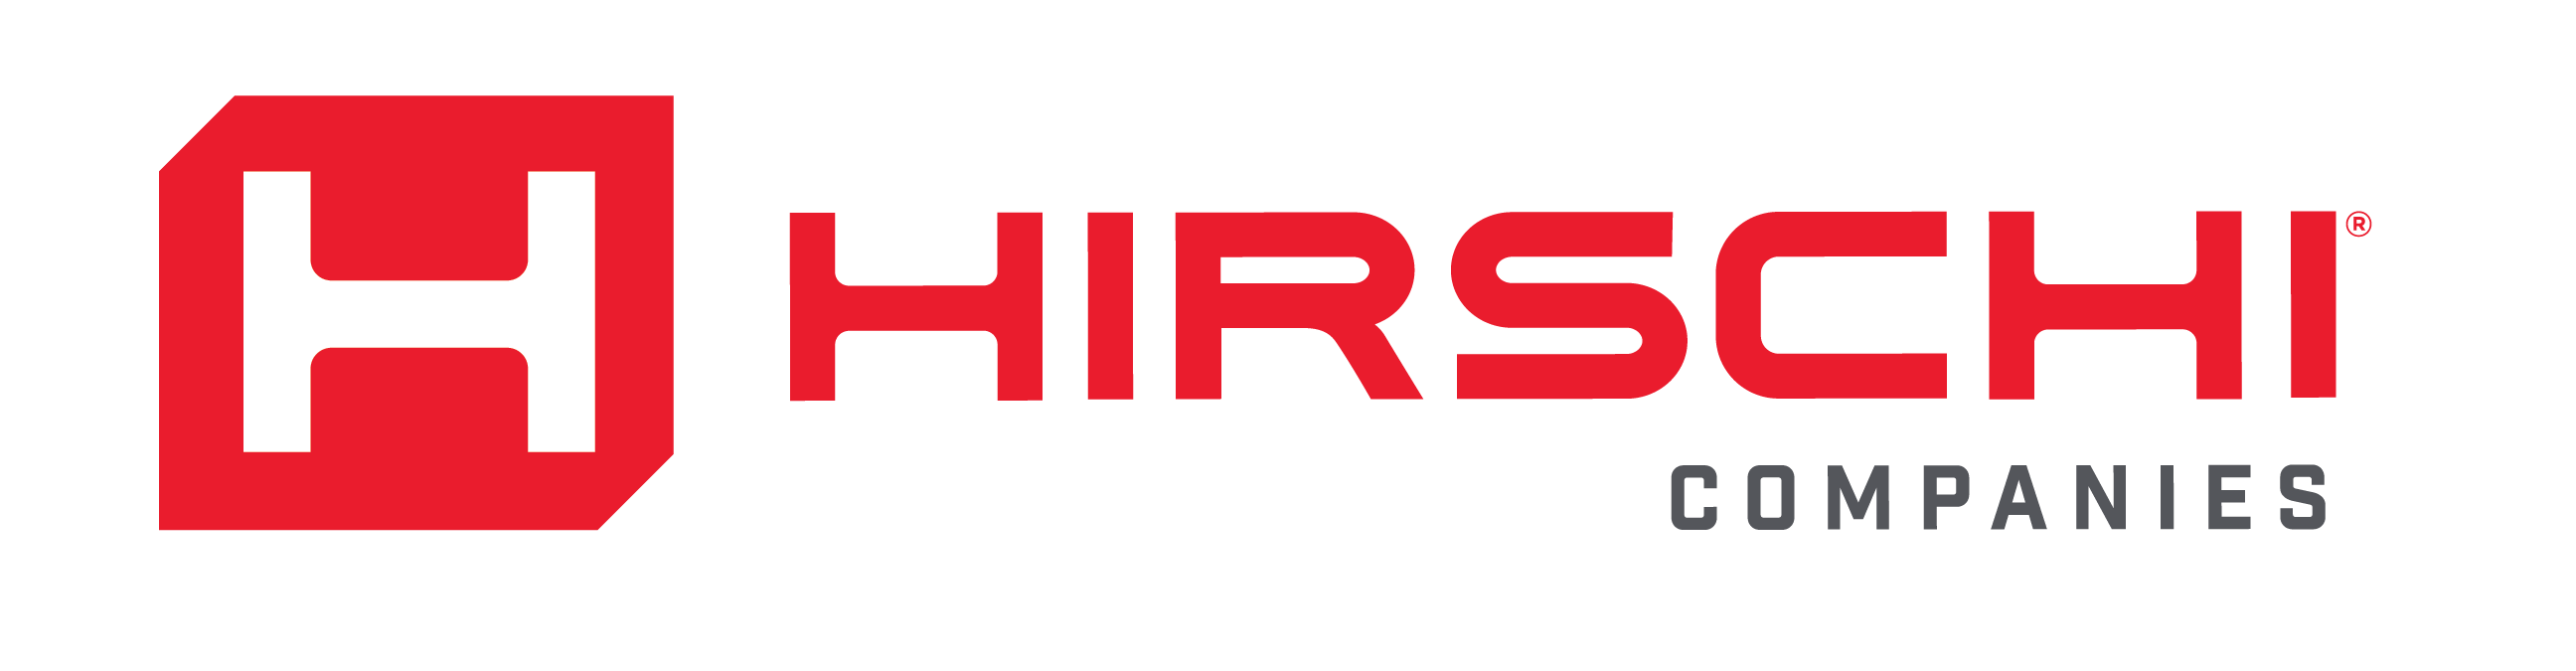 Hirschi Companies